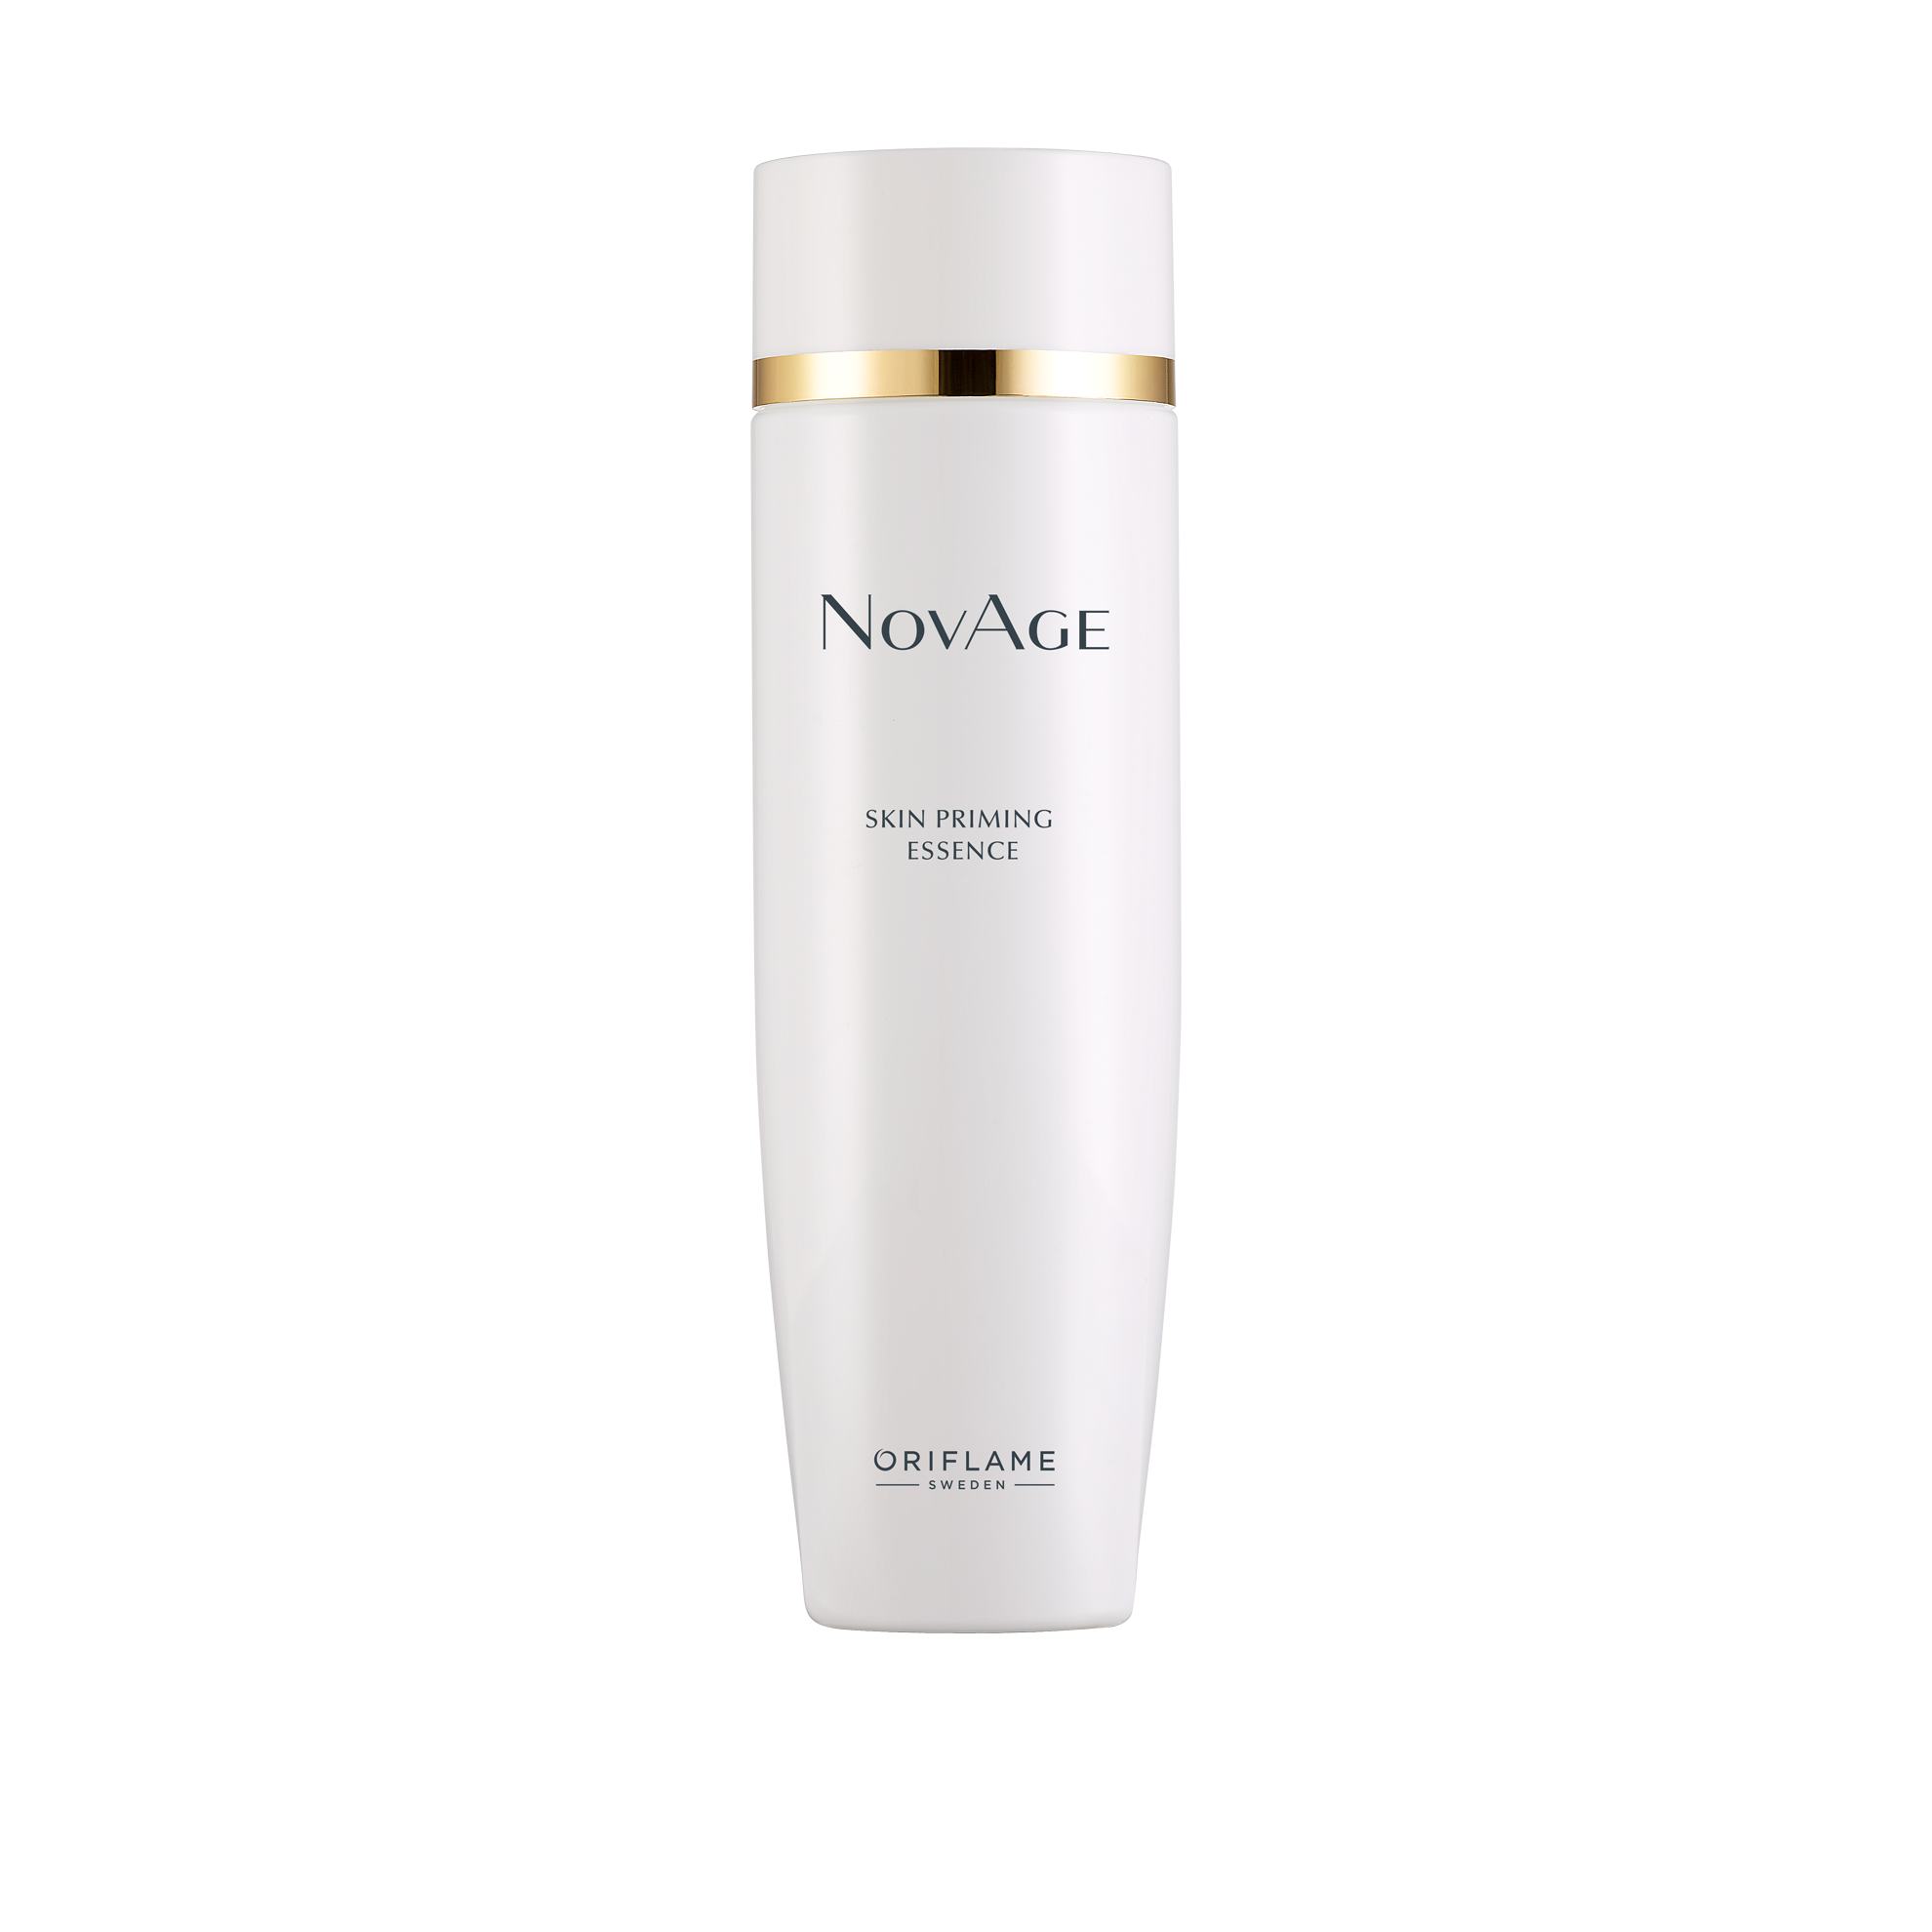 NovAge Skin Priming Essence (33987) toner-essence-mist – Dưỡng da | Oriflame cosmetics